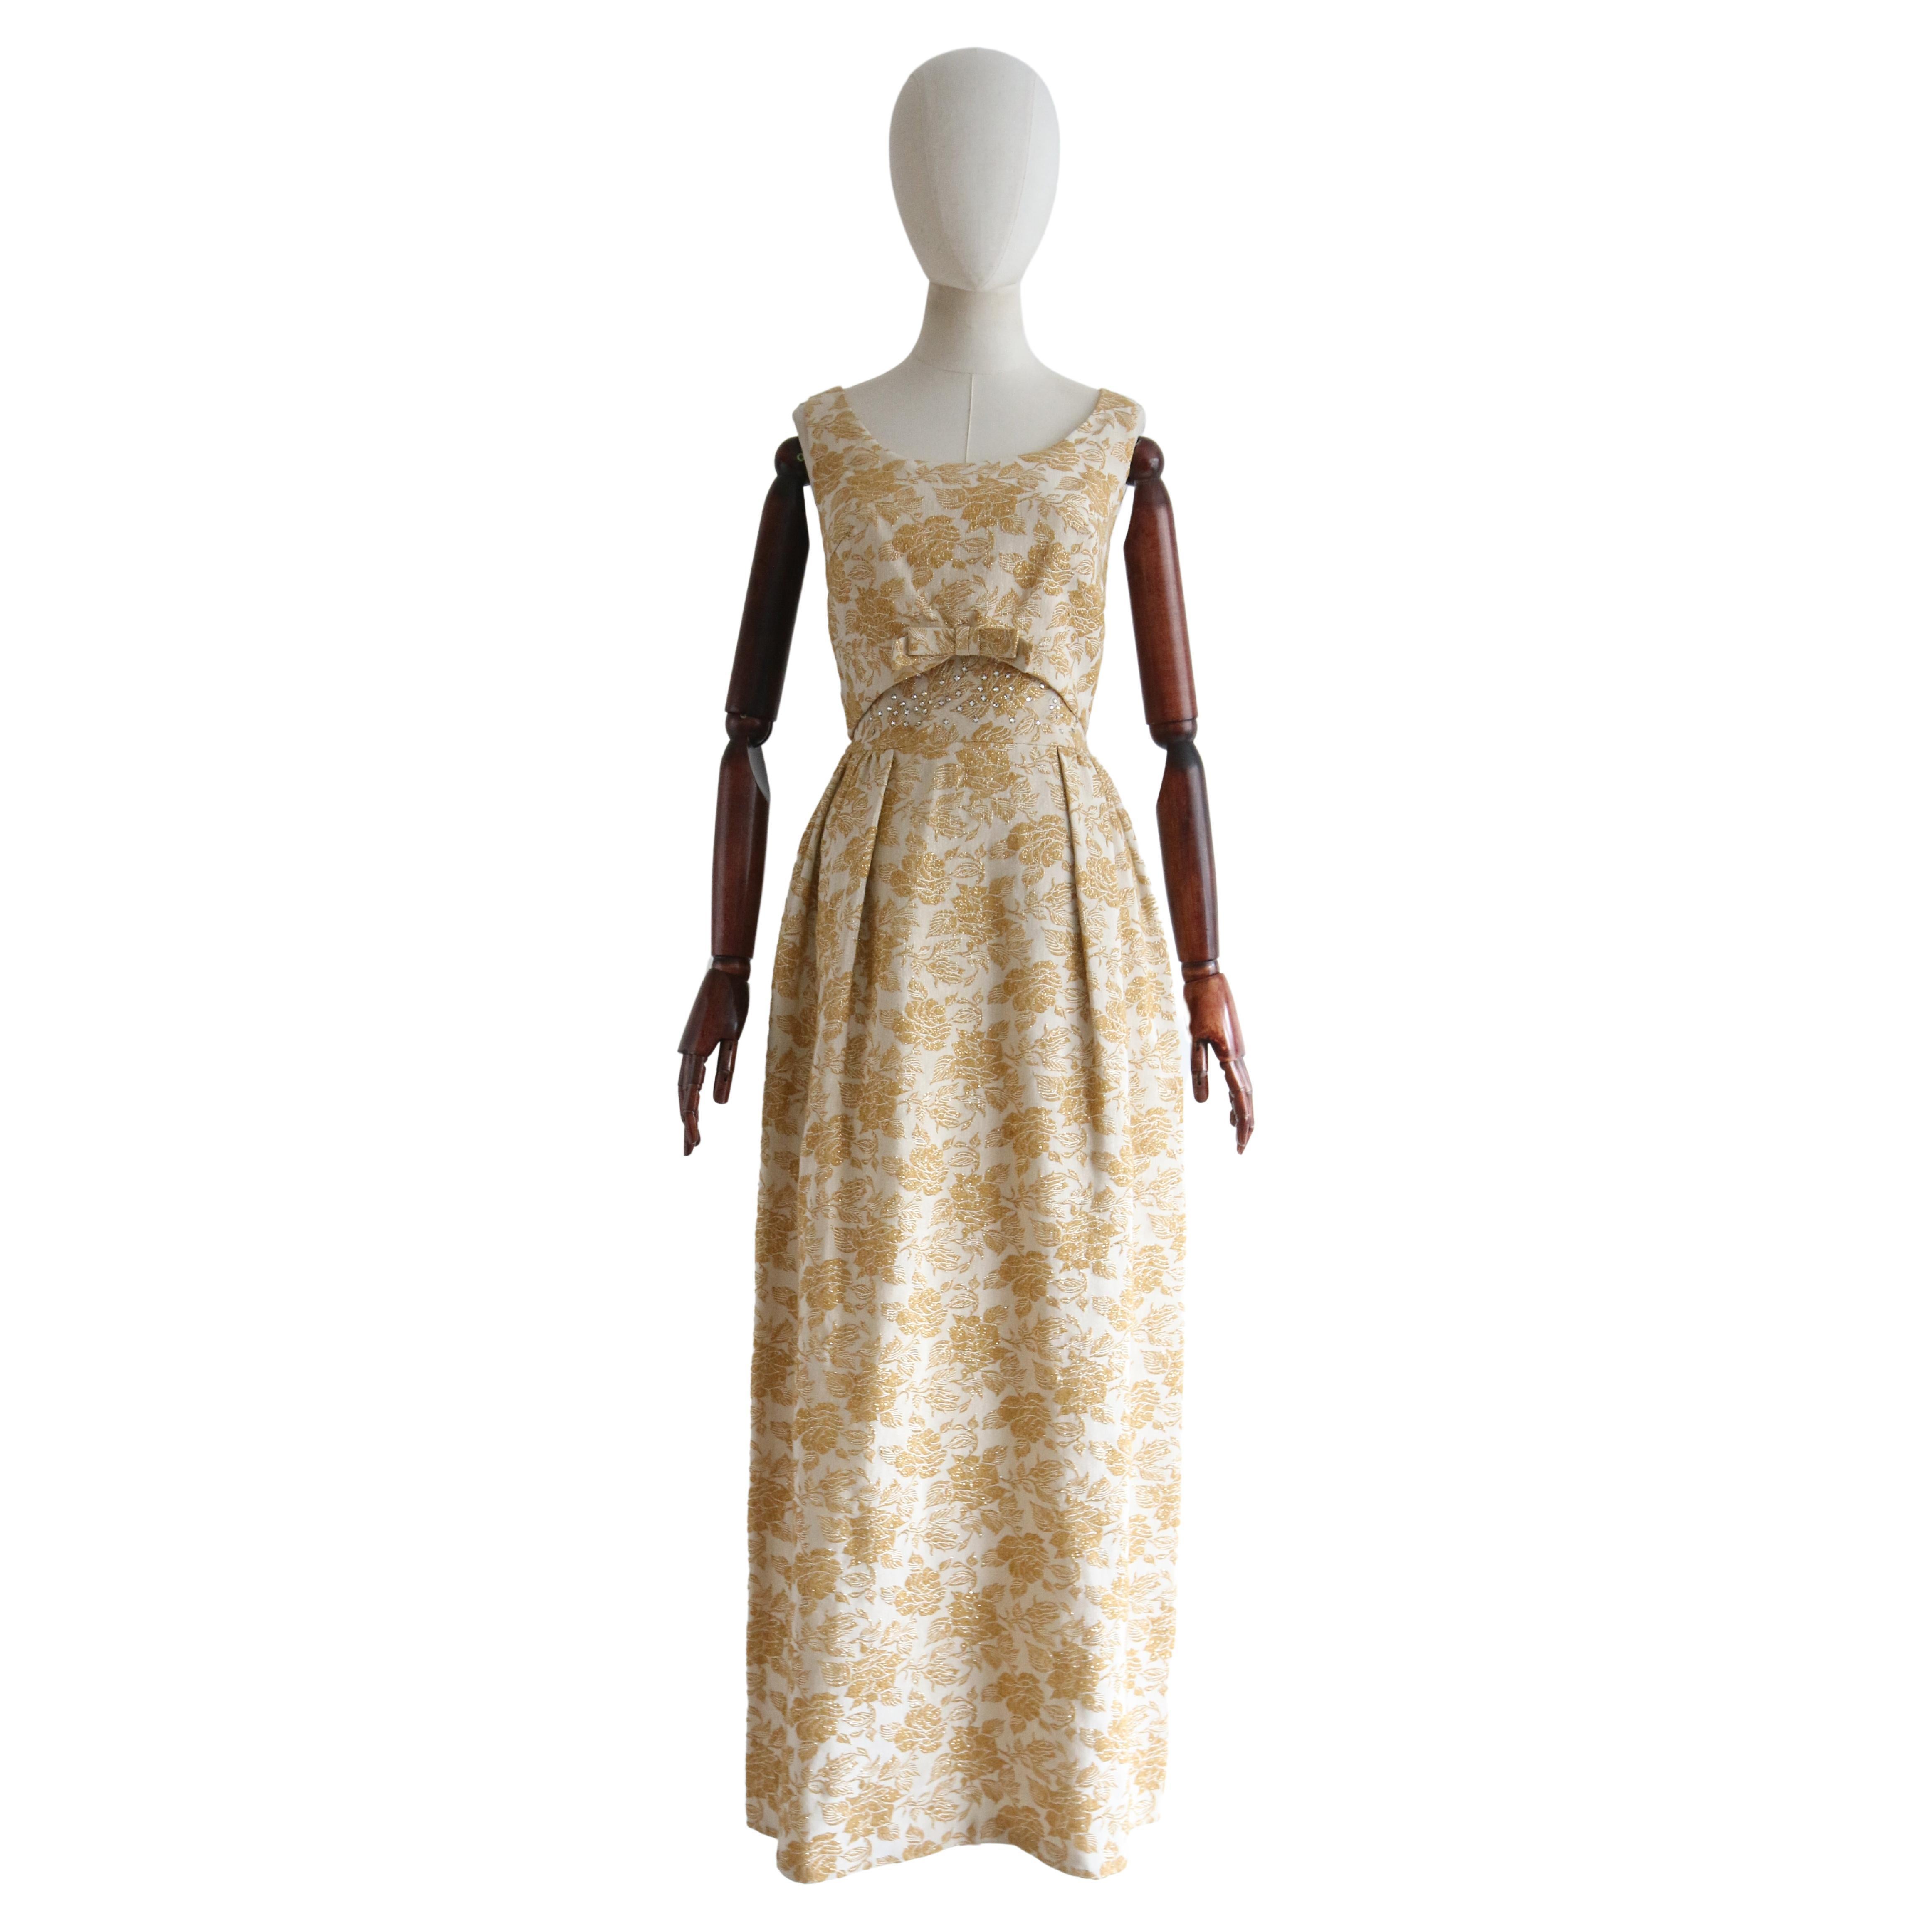  Vintage 1960's Gold Lurex Brocade & Rhinestone Evening Gown UK 8 US 4 For Sale